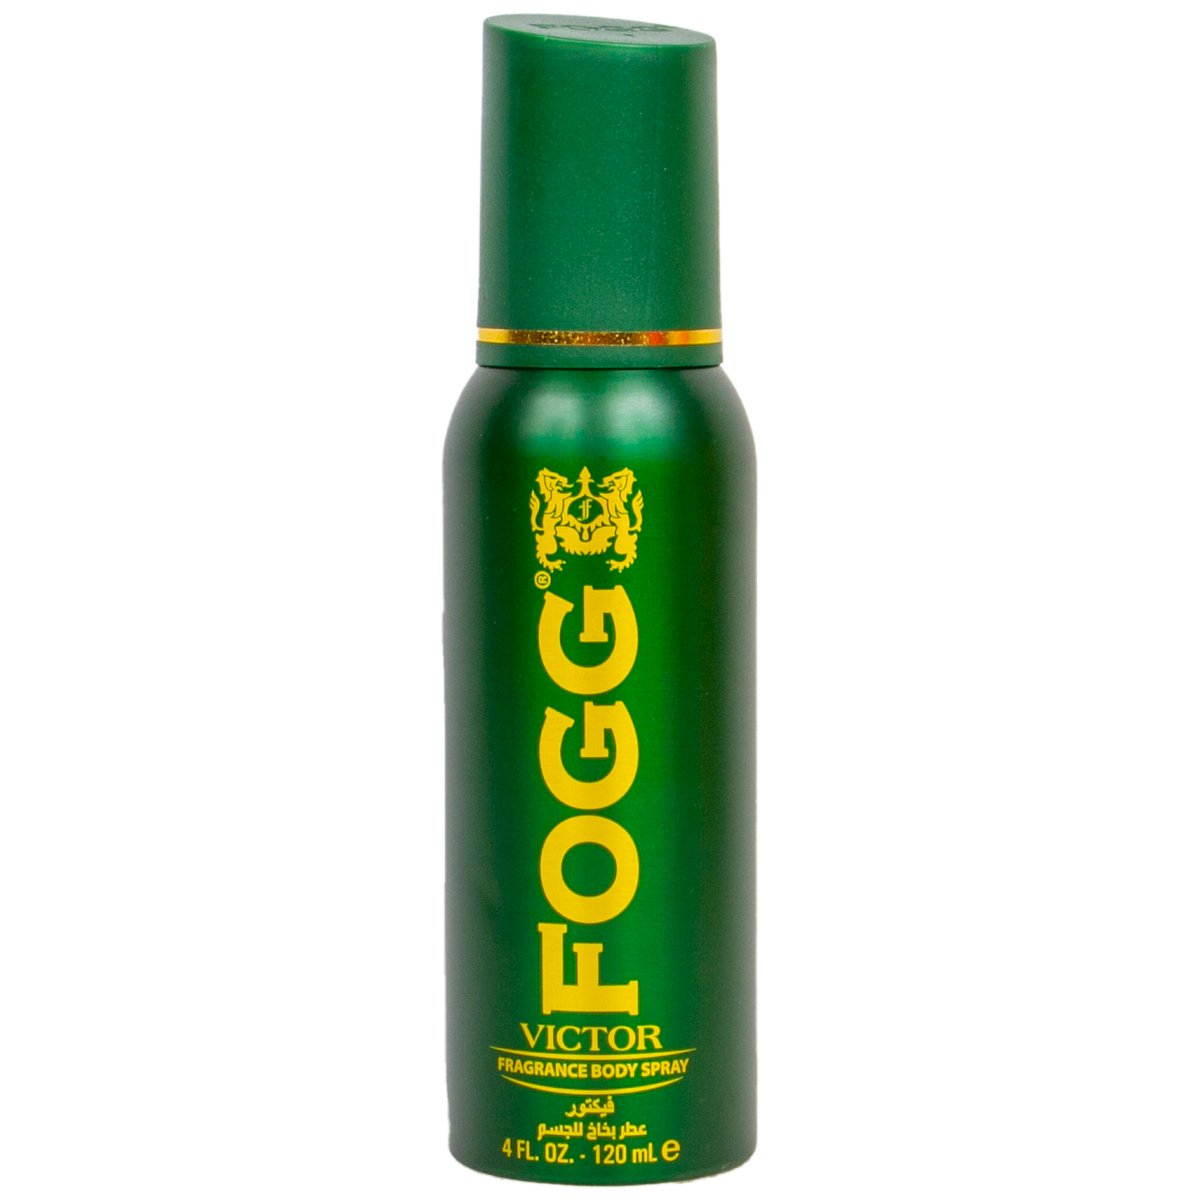 Fogg Victor Fragrance Body Spray for Men 120 ml